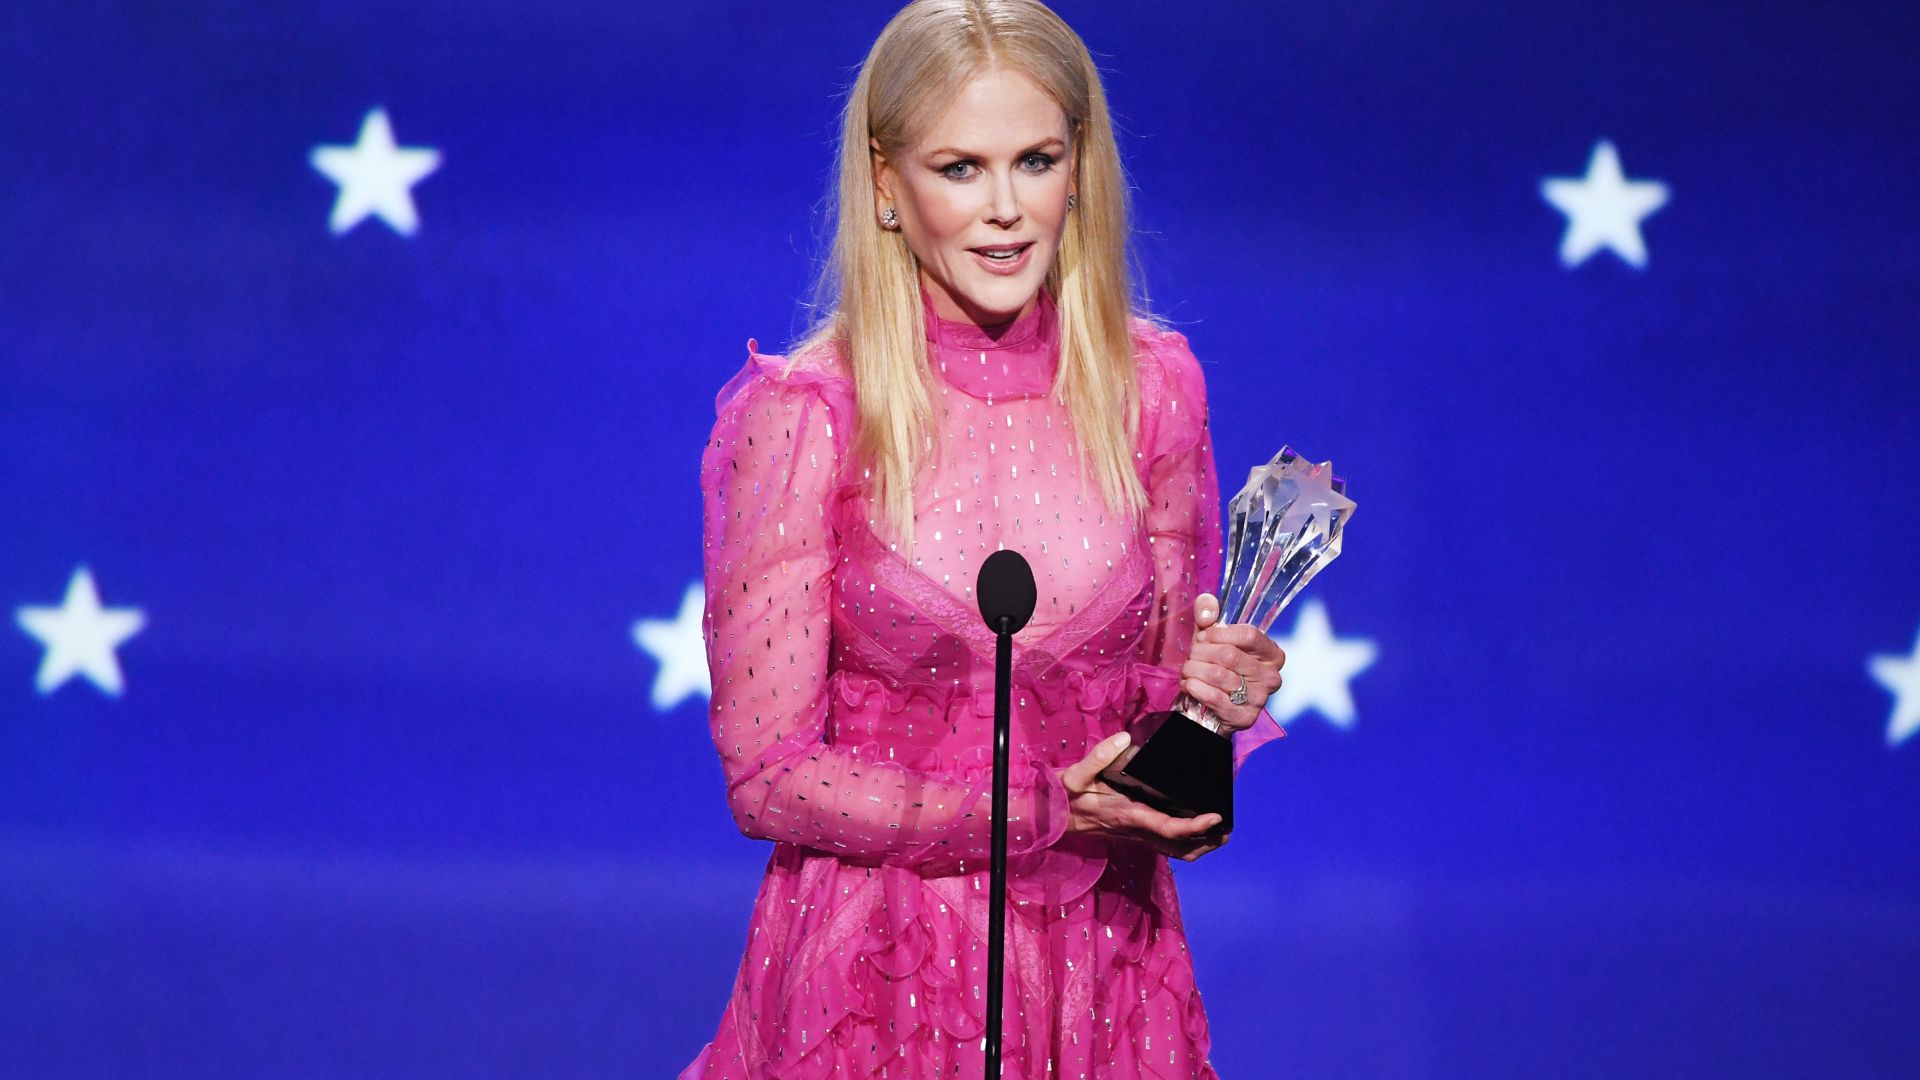 Николь Кидман, блондинка, Nicole Kidman, dress, Critics' Choice Awards 2018, blonde, 4k (horizontal)